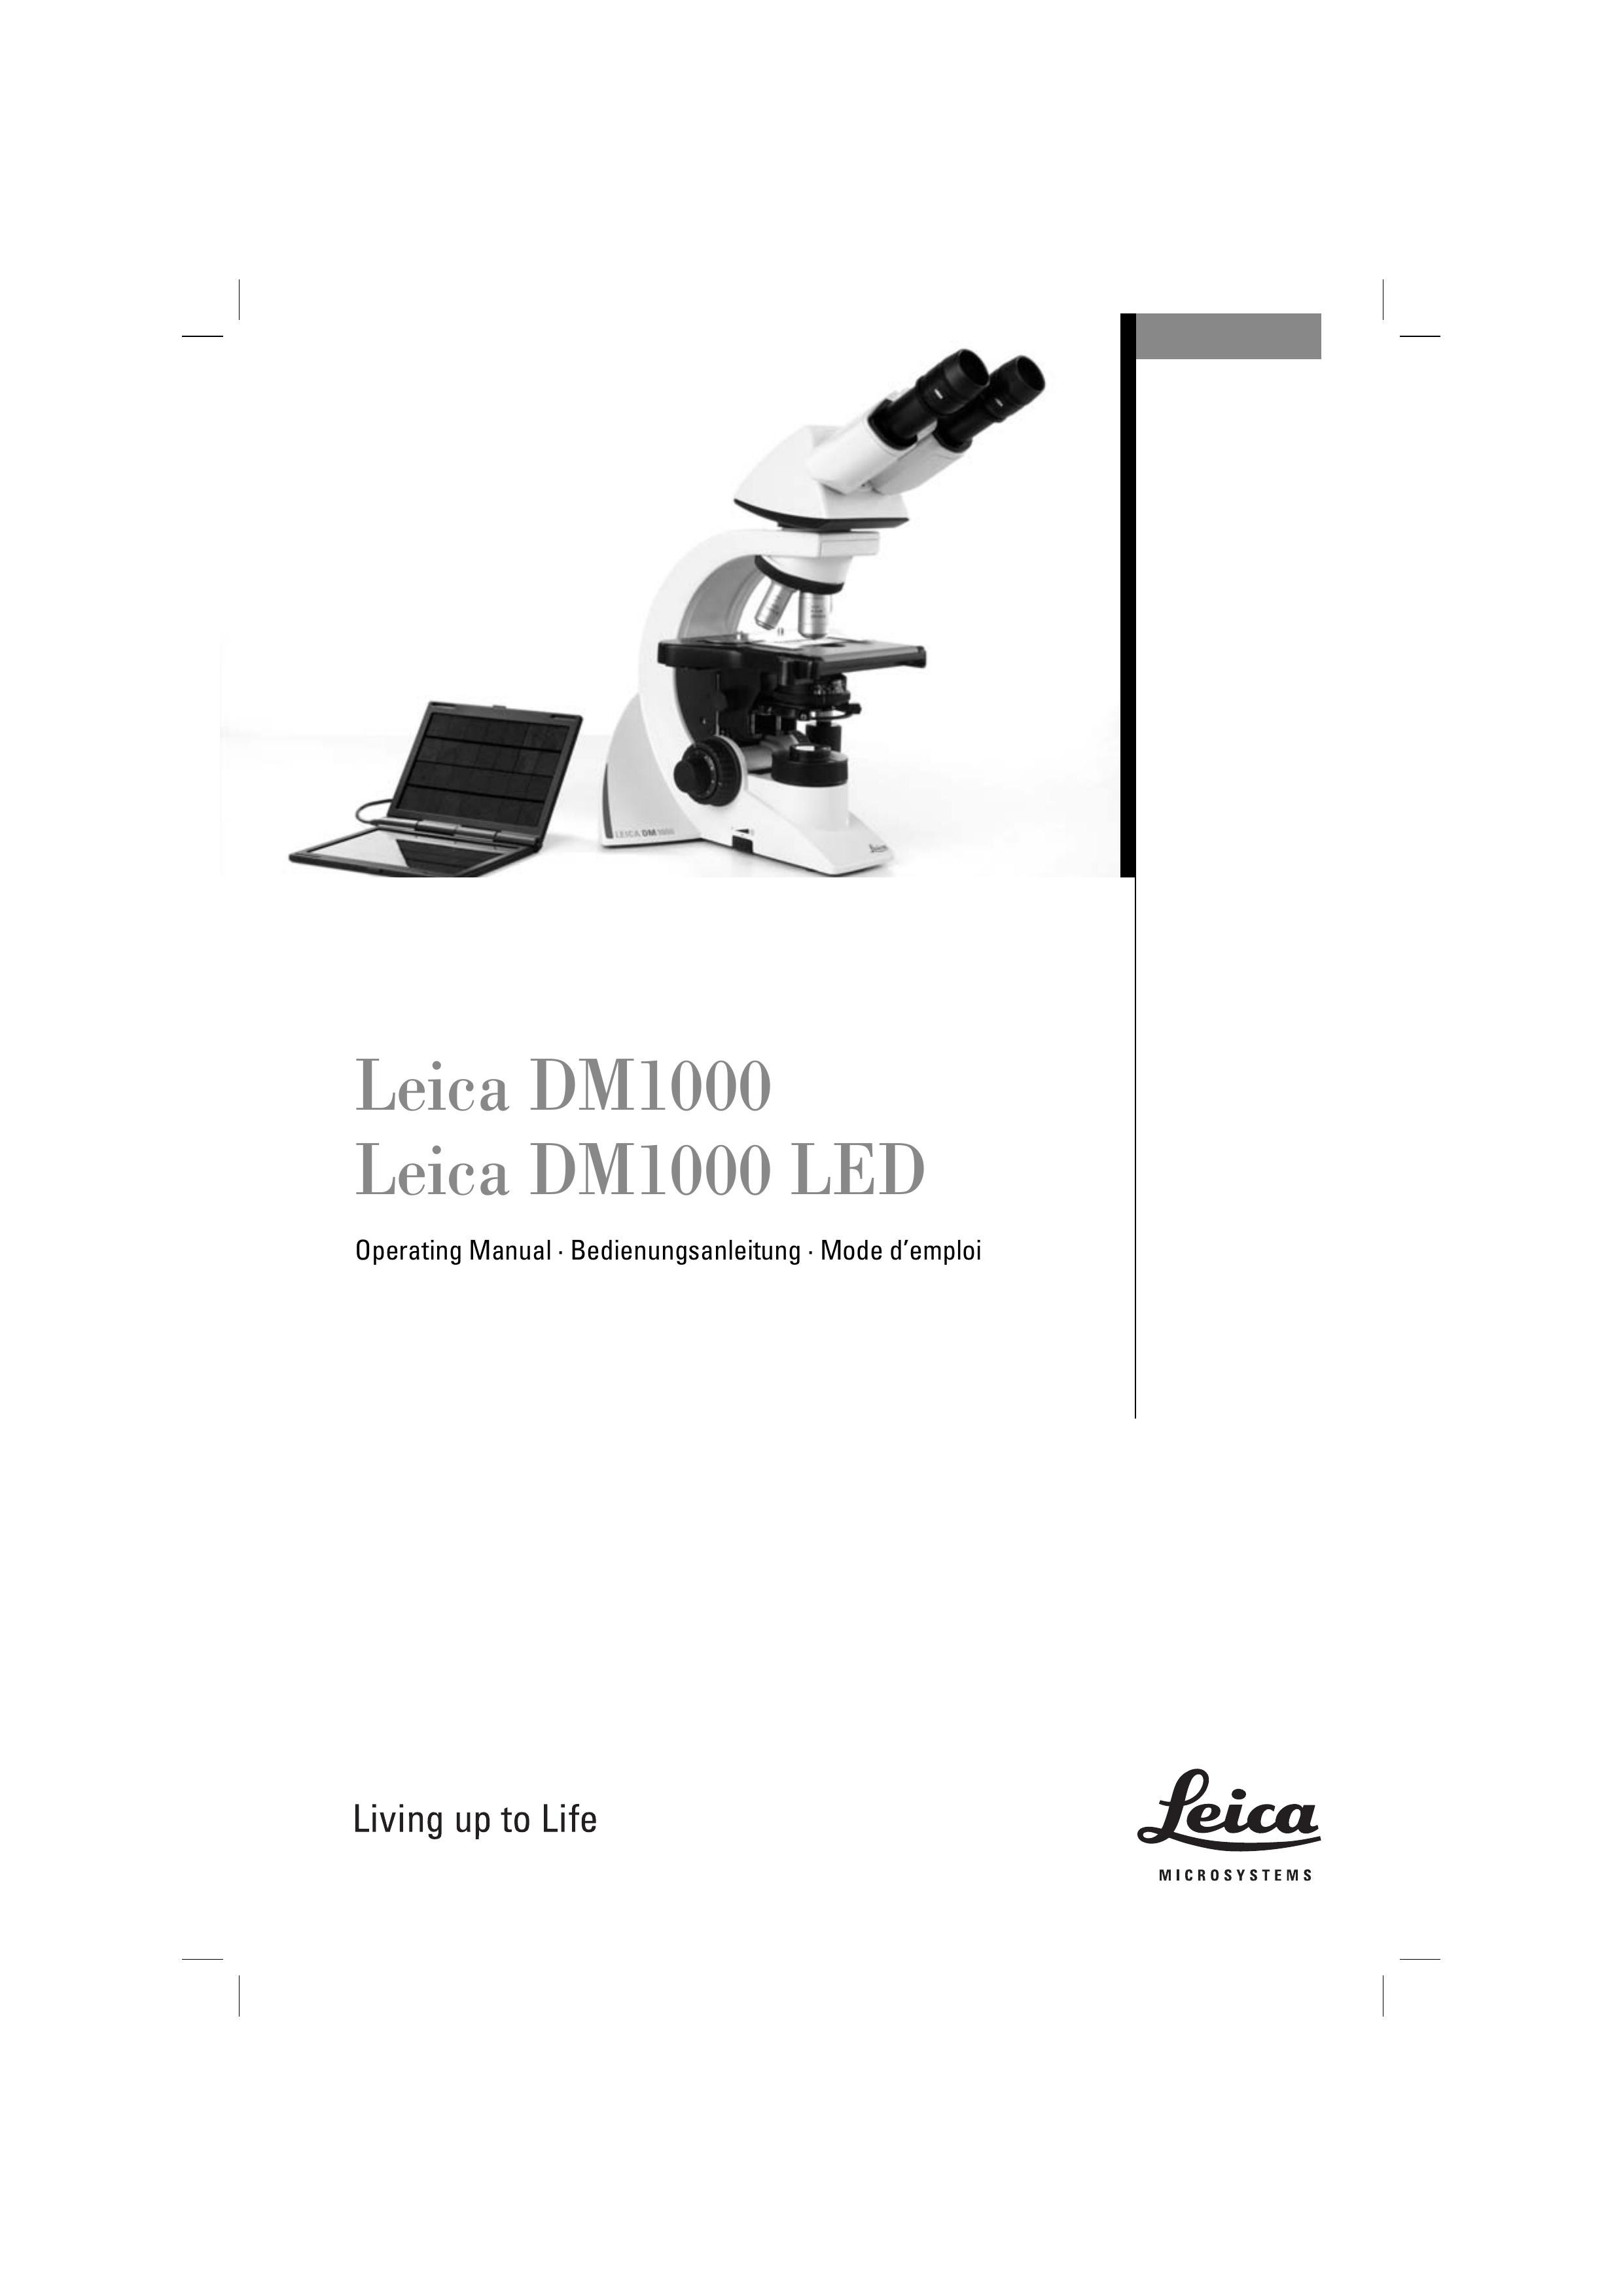 Leica DM1000 LED Microscope & Magnifier User Manual